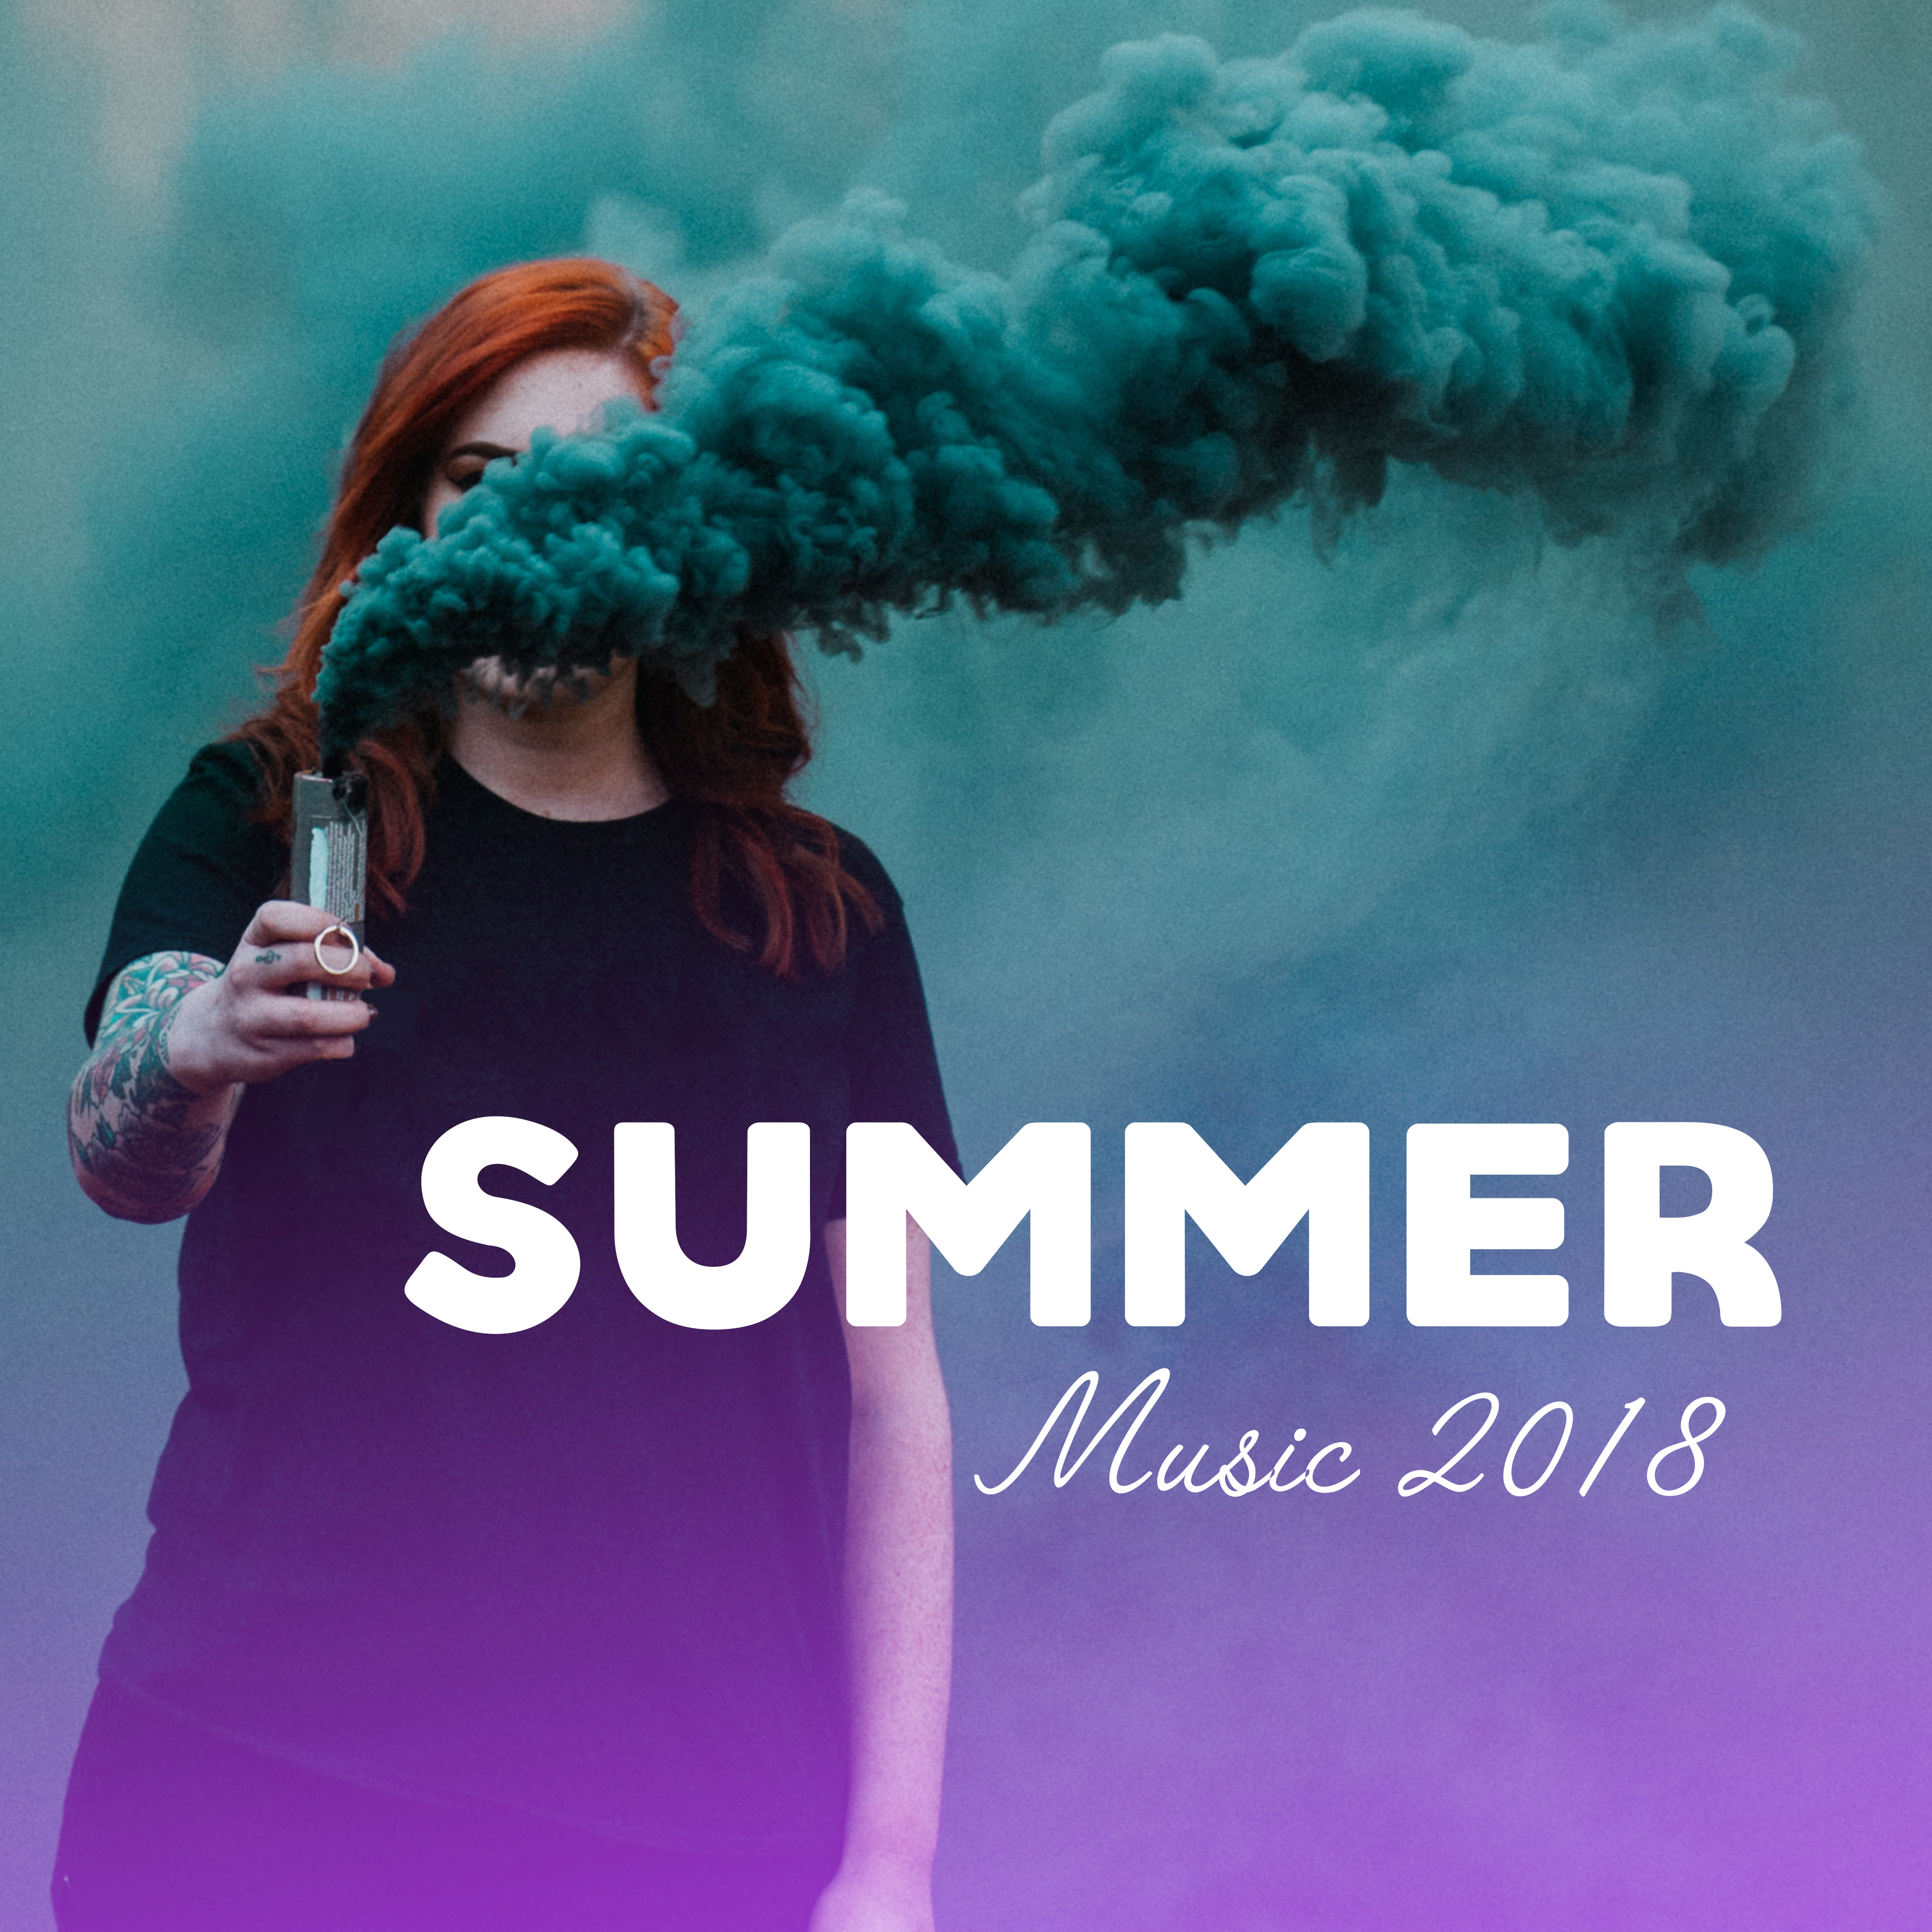 Summer Music 2018